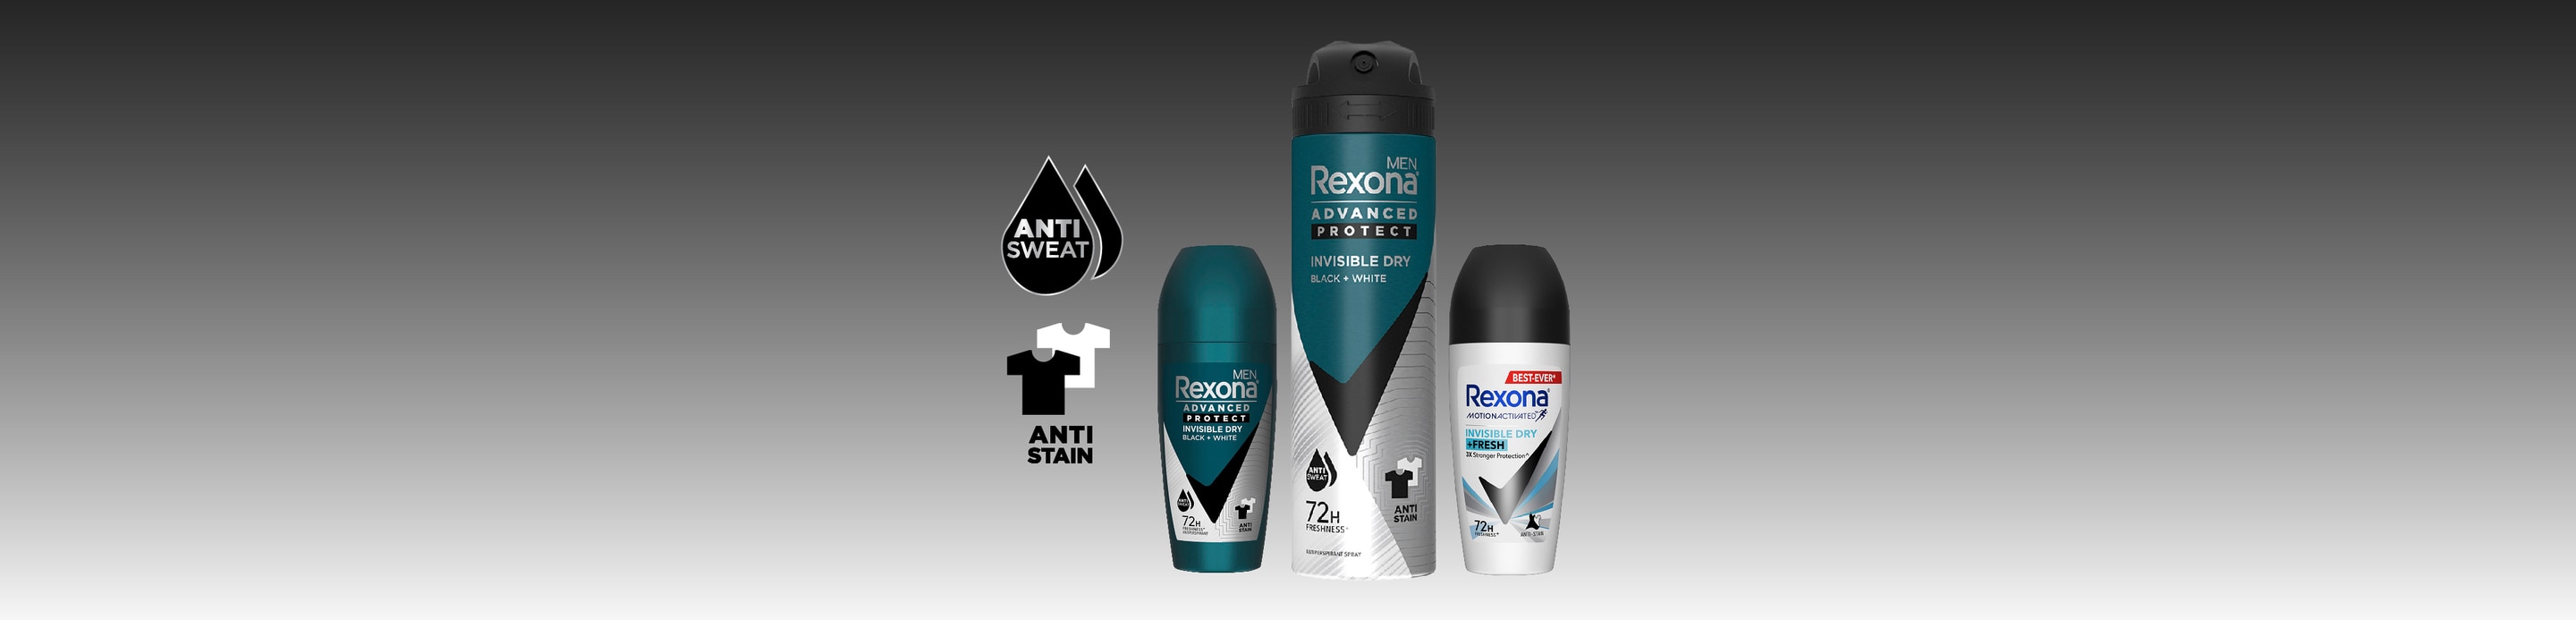 Rexona Men and Women Invisible Black and White Antiperspirant Deodorant